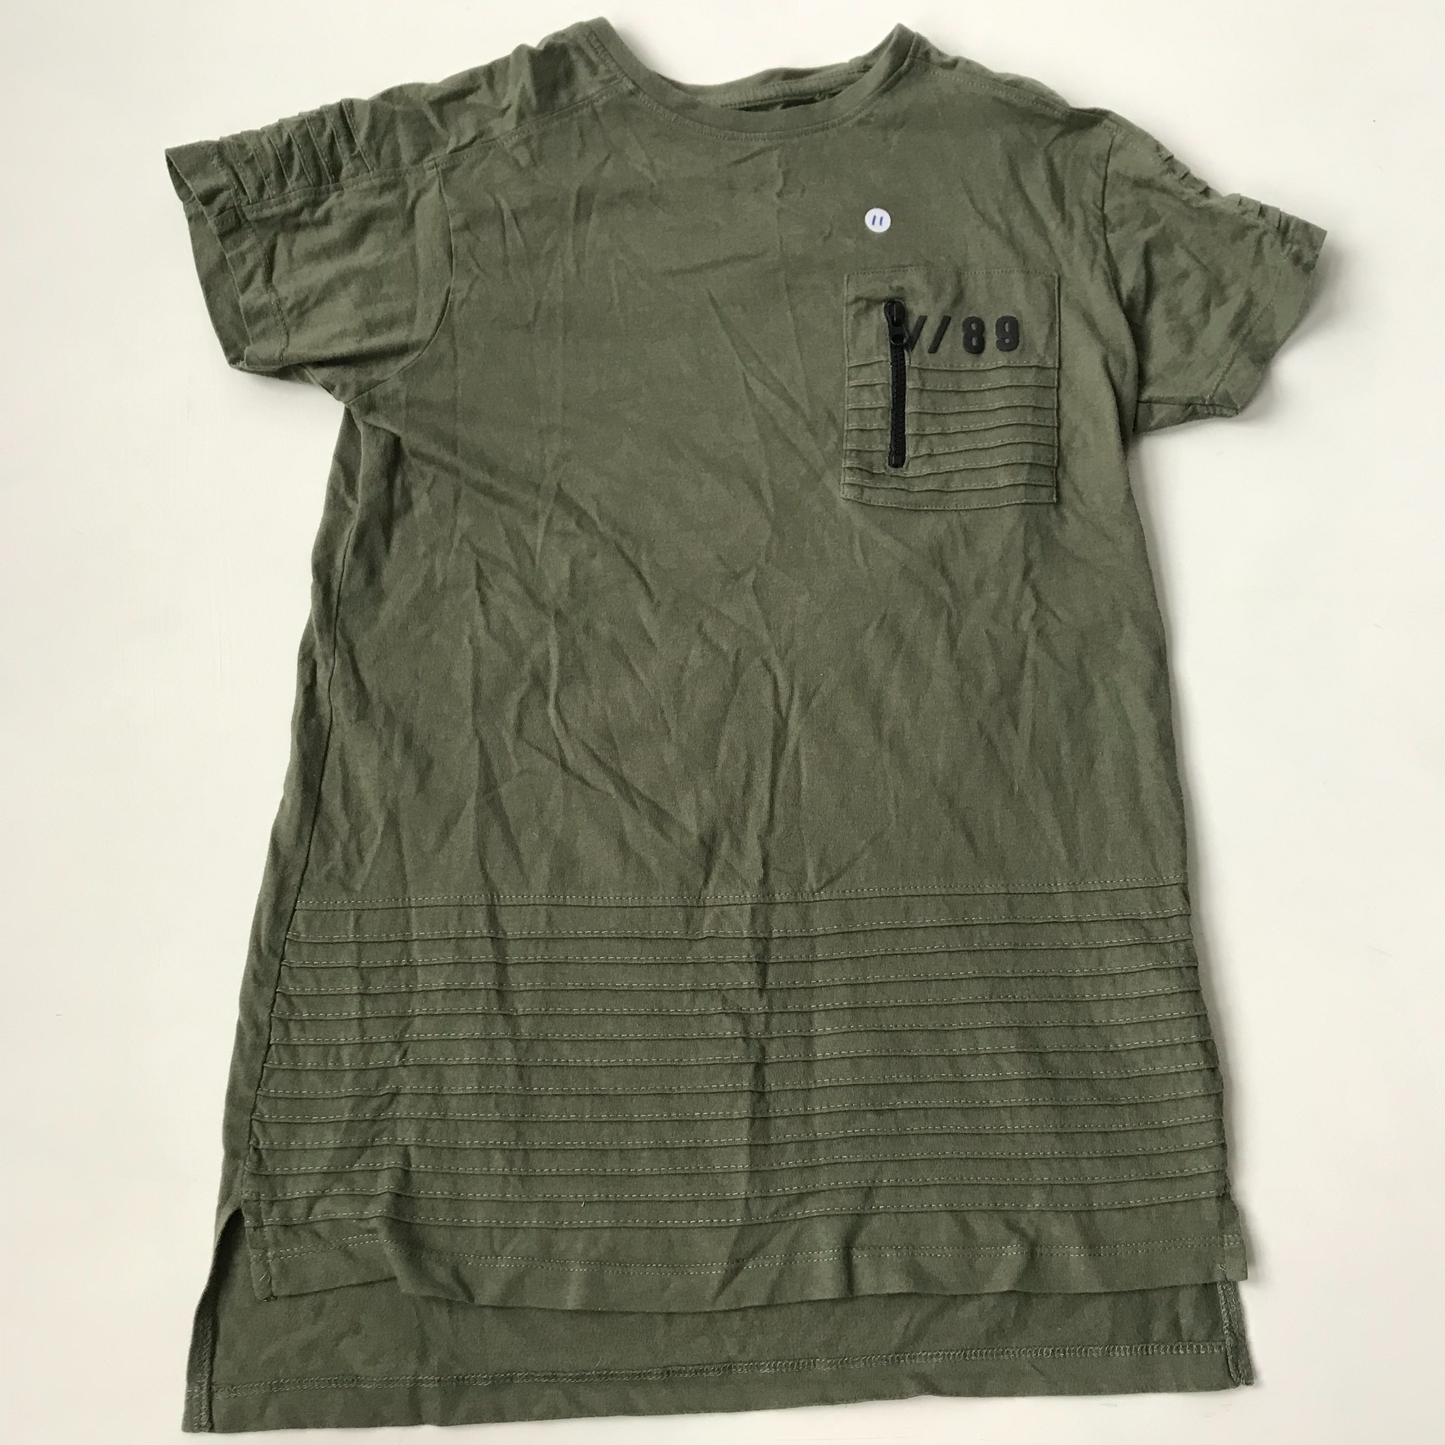 T-shirt - Khaki Green - Age 11